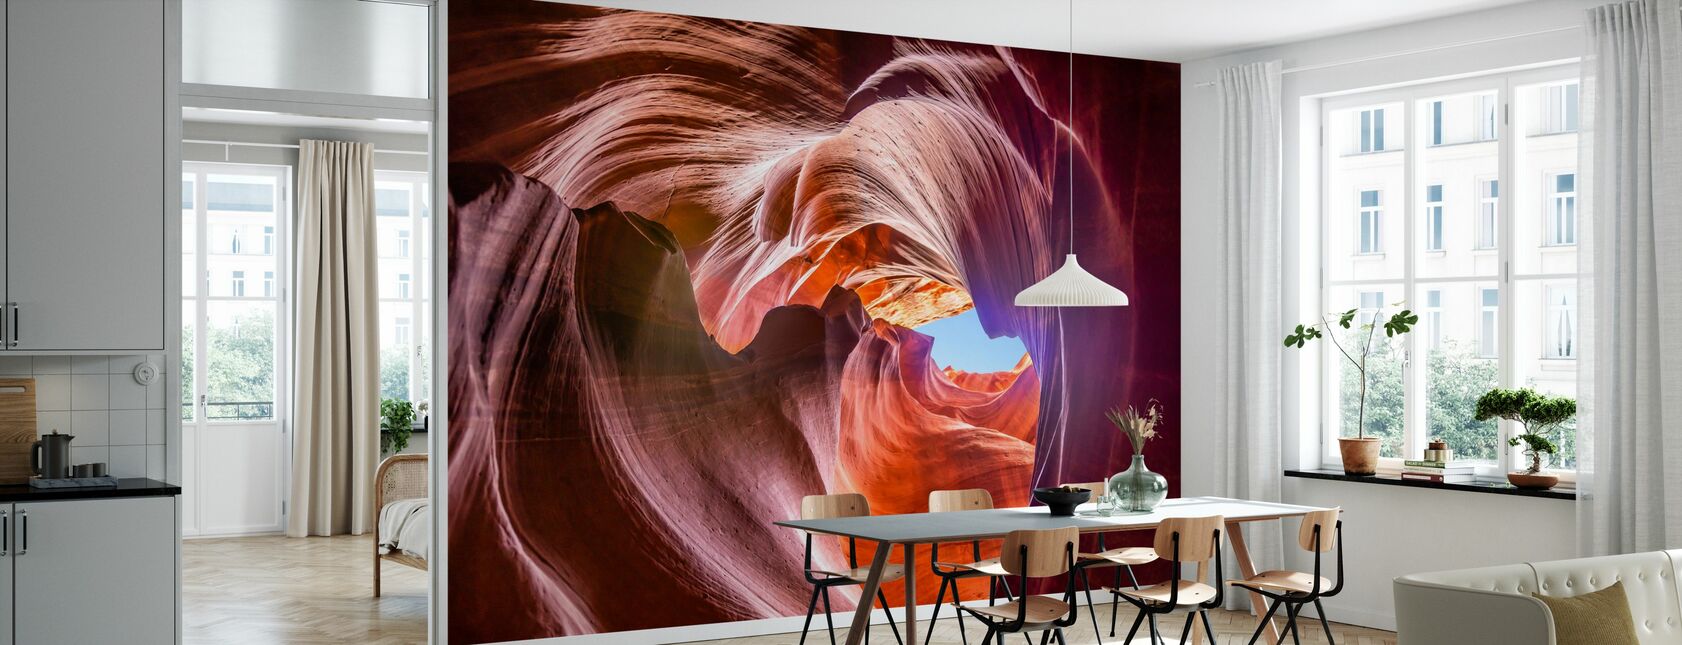 Upper Antelope Canyon - Wallpaper - Kitchen